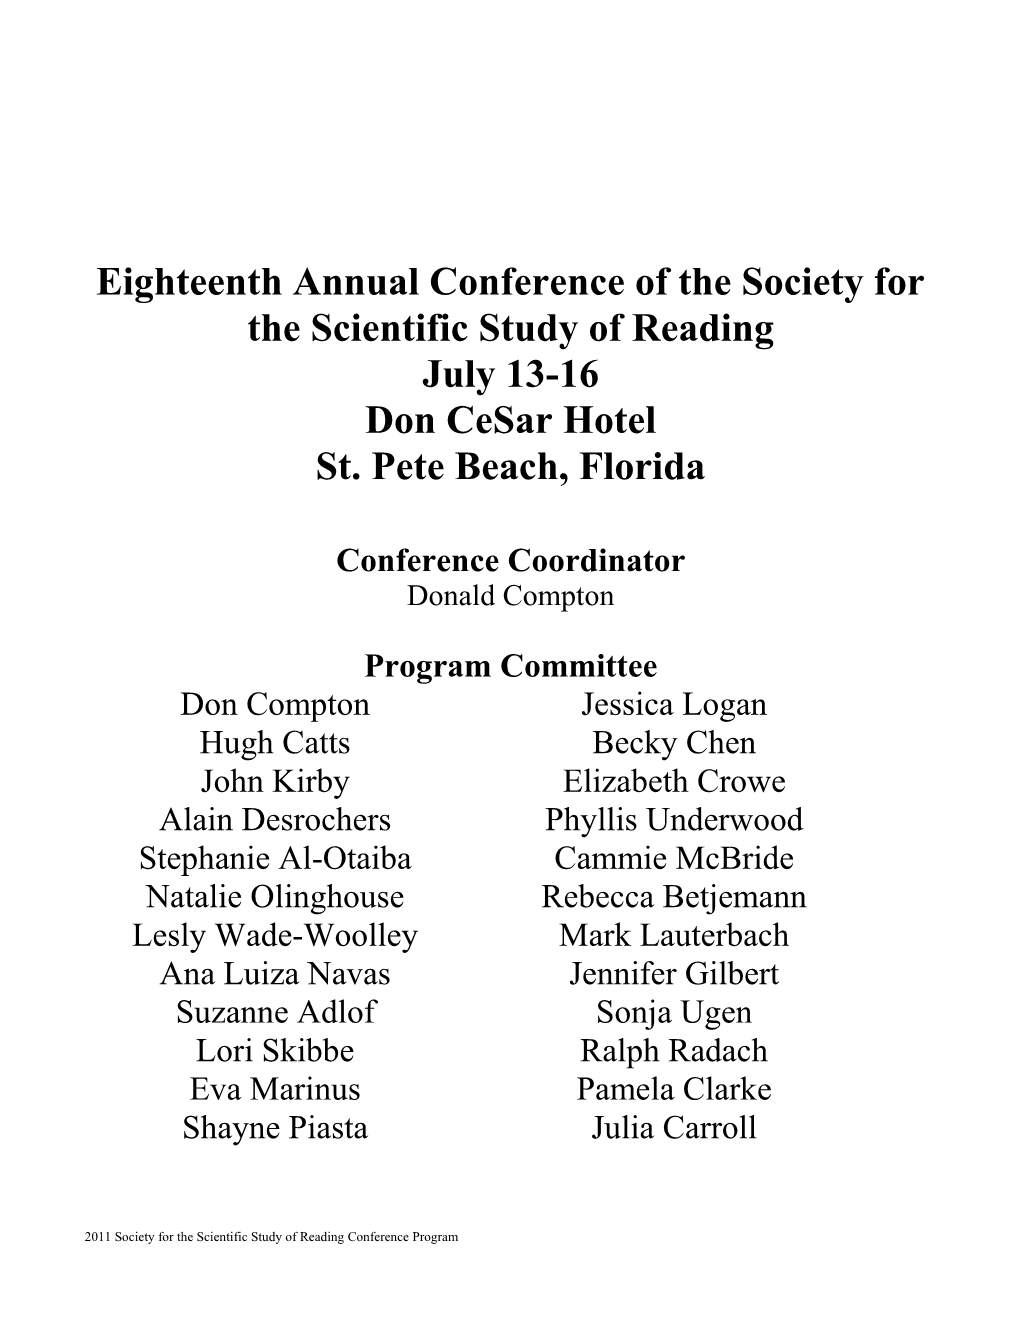 Florida Conference Program (PDF)